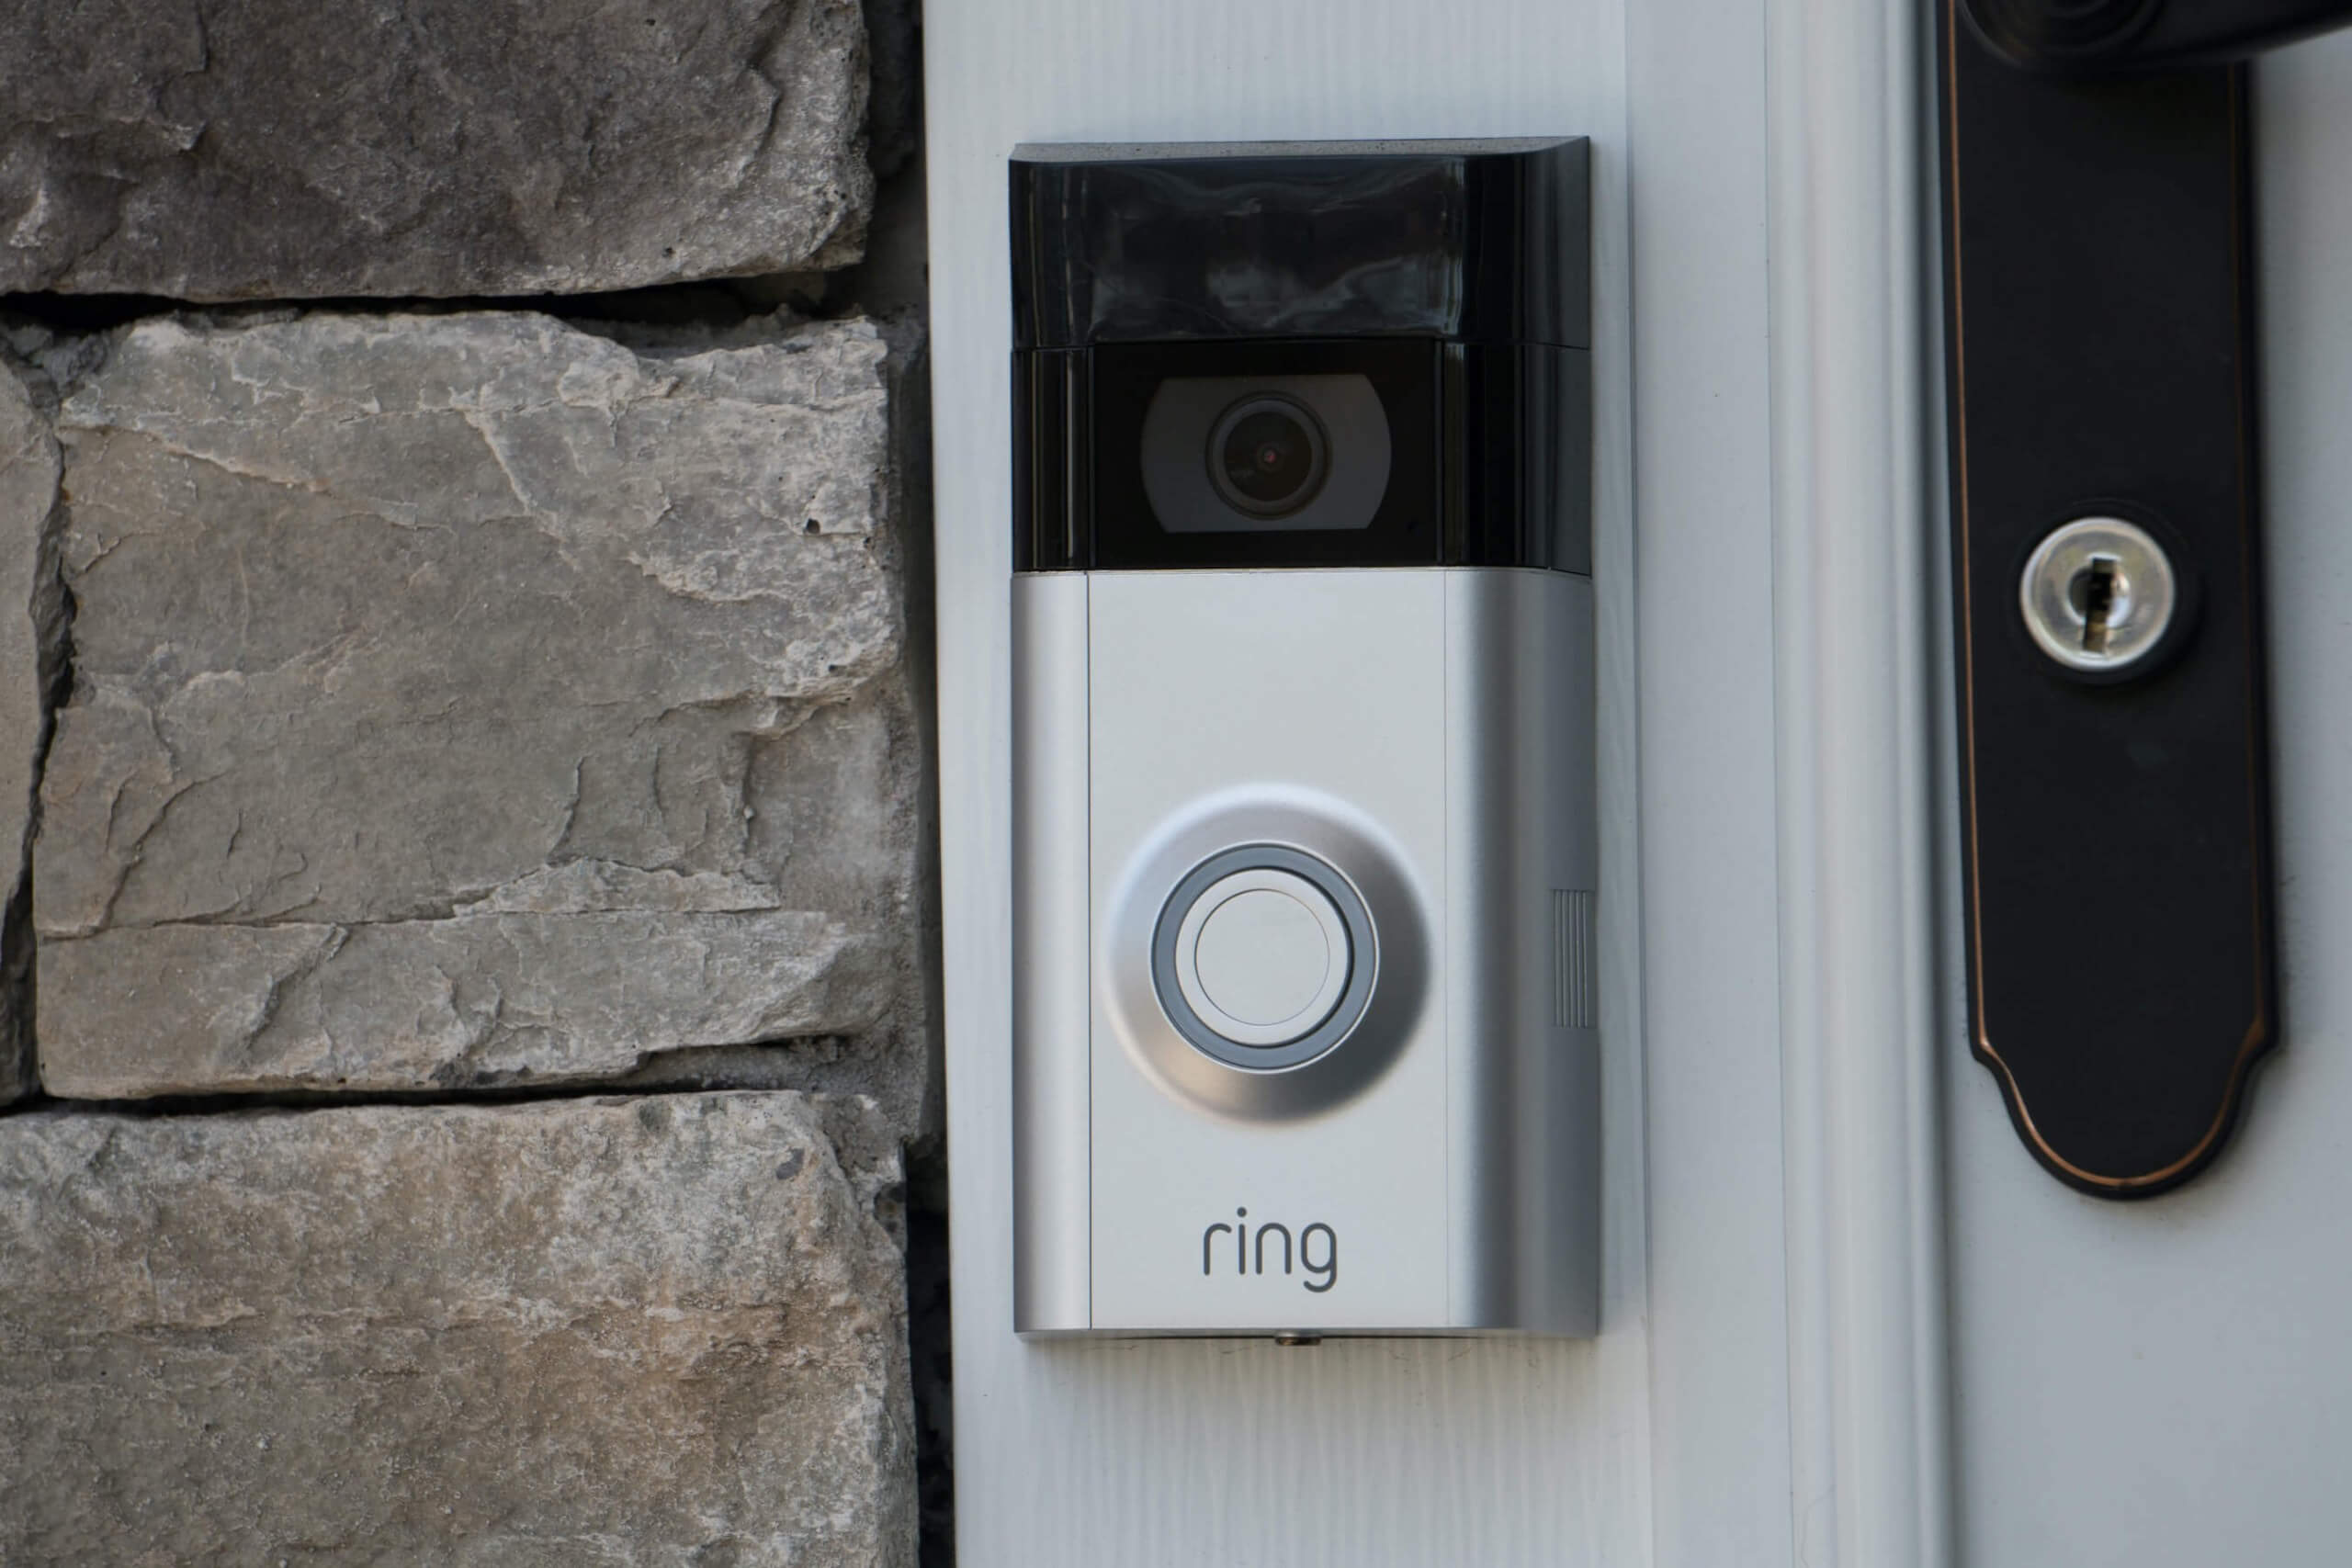 Hand tools that protect against coronavirus are breaking Ring doorbells